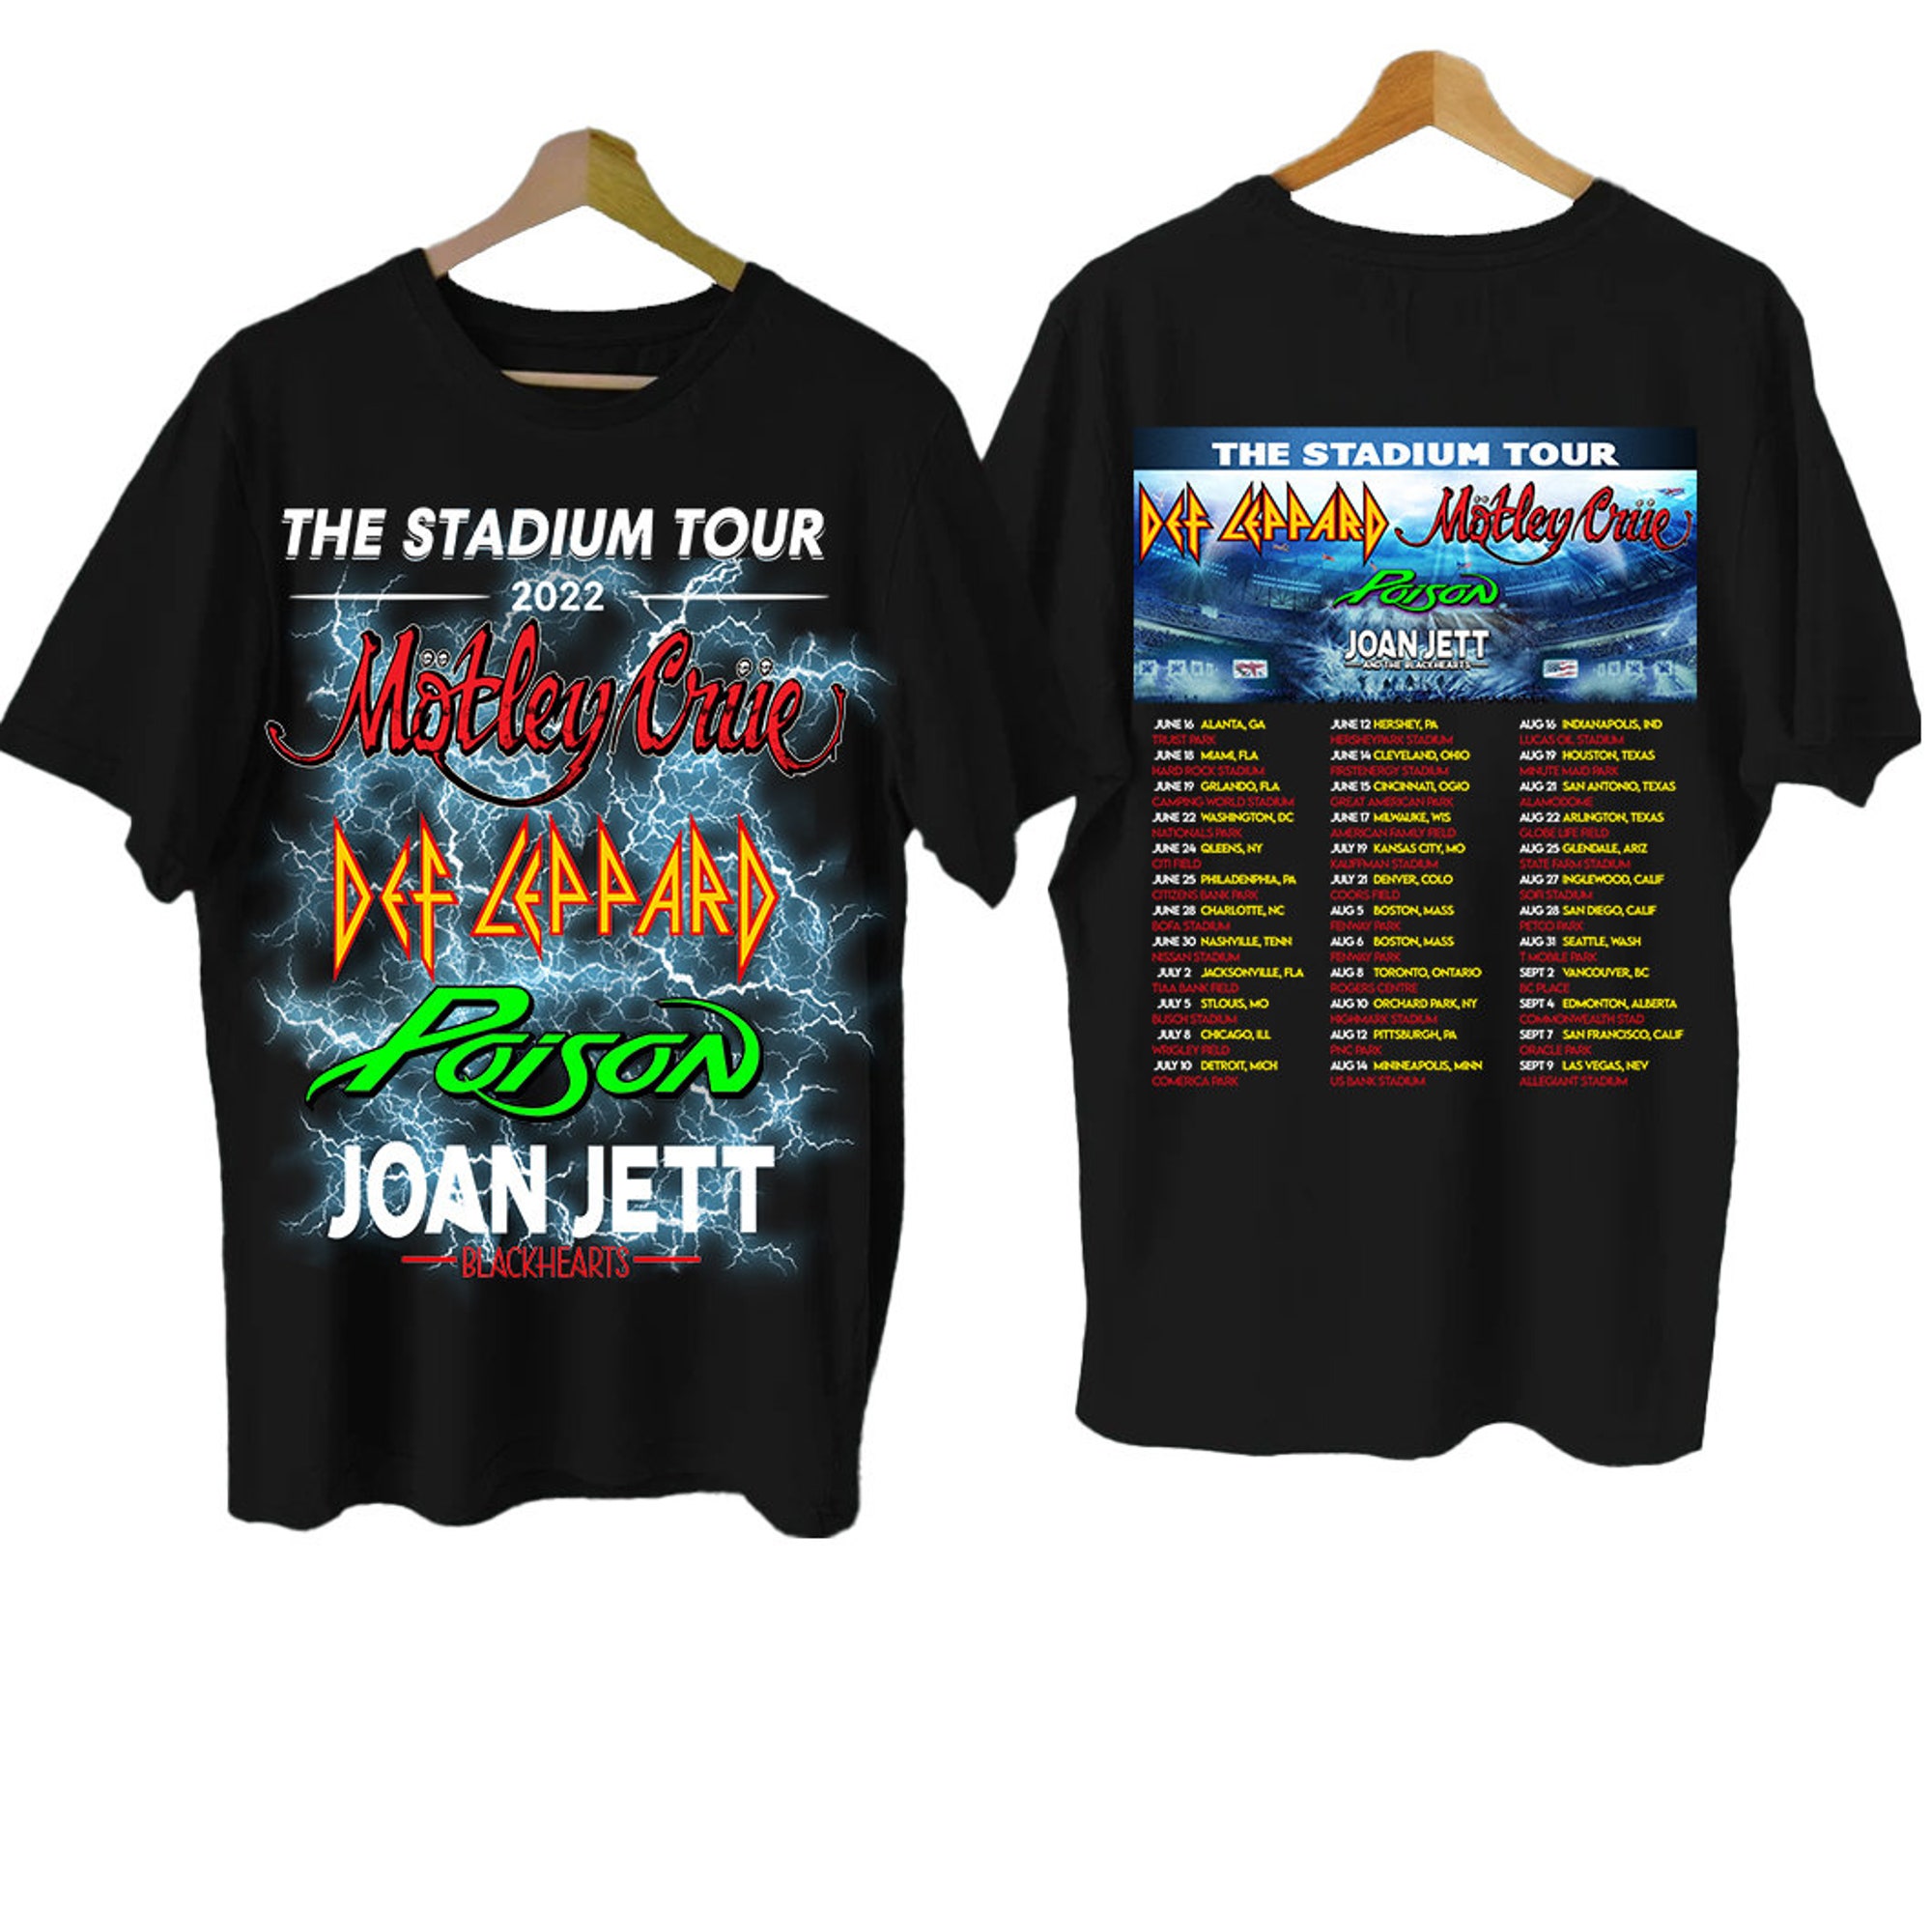 The Stadium Tour 2022 Shirt, Motley Crue Shirt, Def Leppard Motley Crue Poison Joan Jett & The Blackhearts Shirt